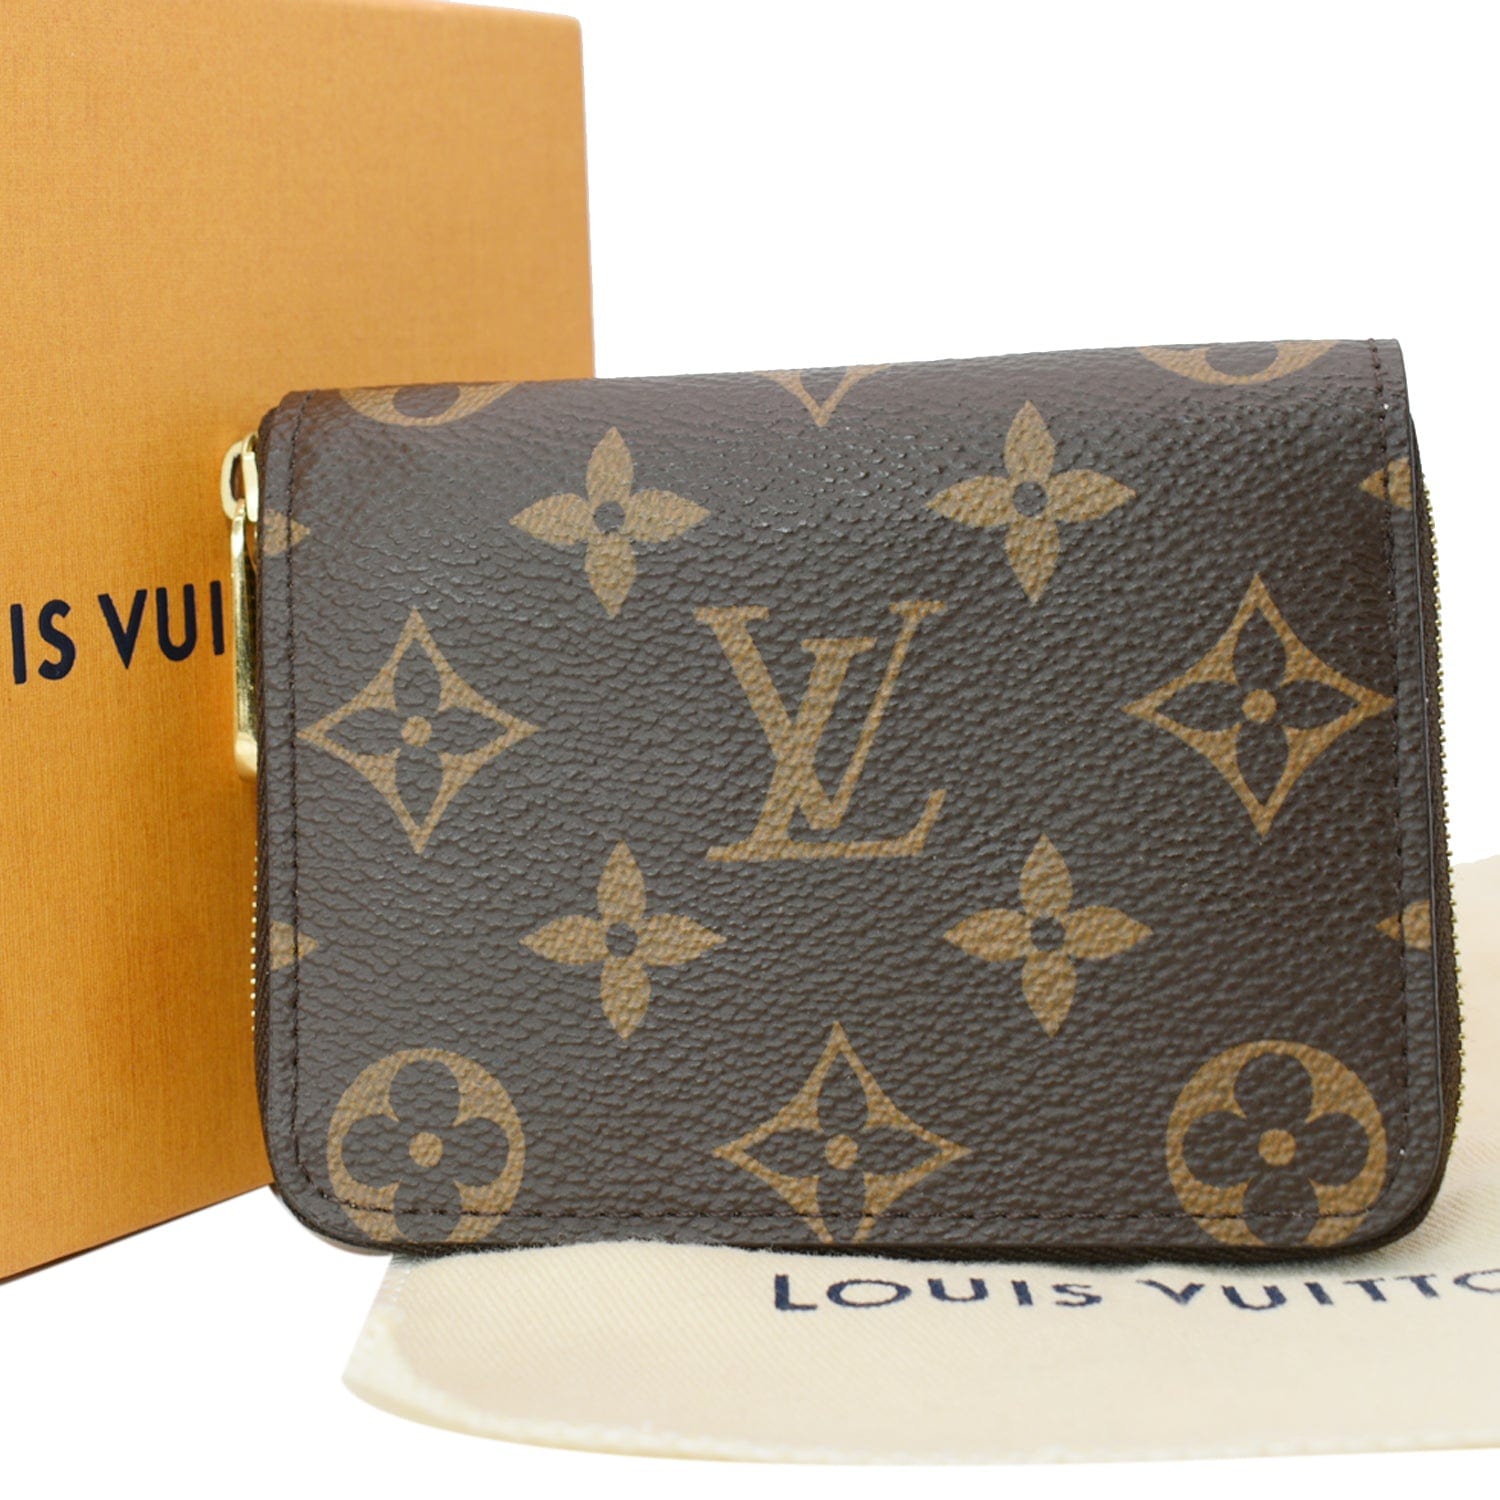 Louie Vuitton No Its Poochie Vuitton Stock Photo - Download Image Now -  Dog, Purse, Louis Vuitton - Designer Label - iStock